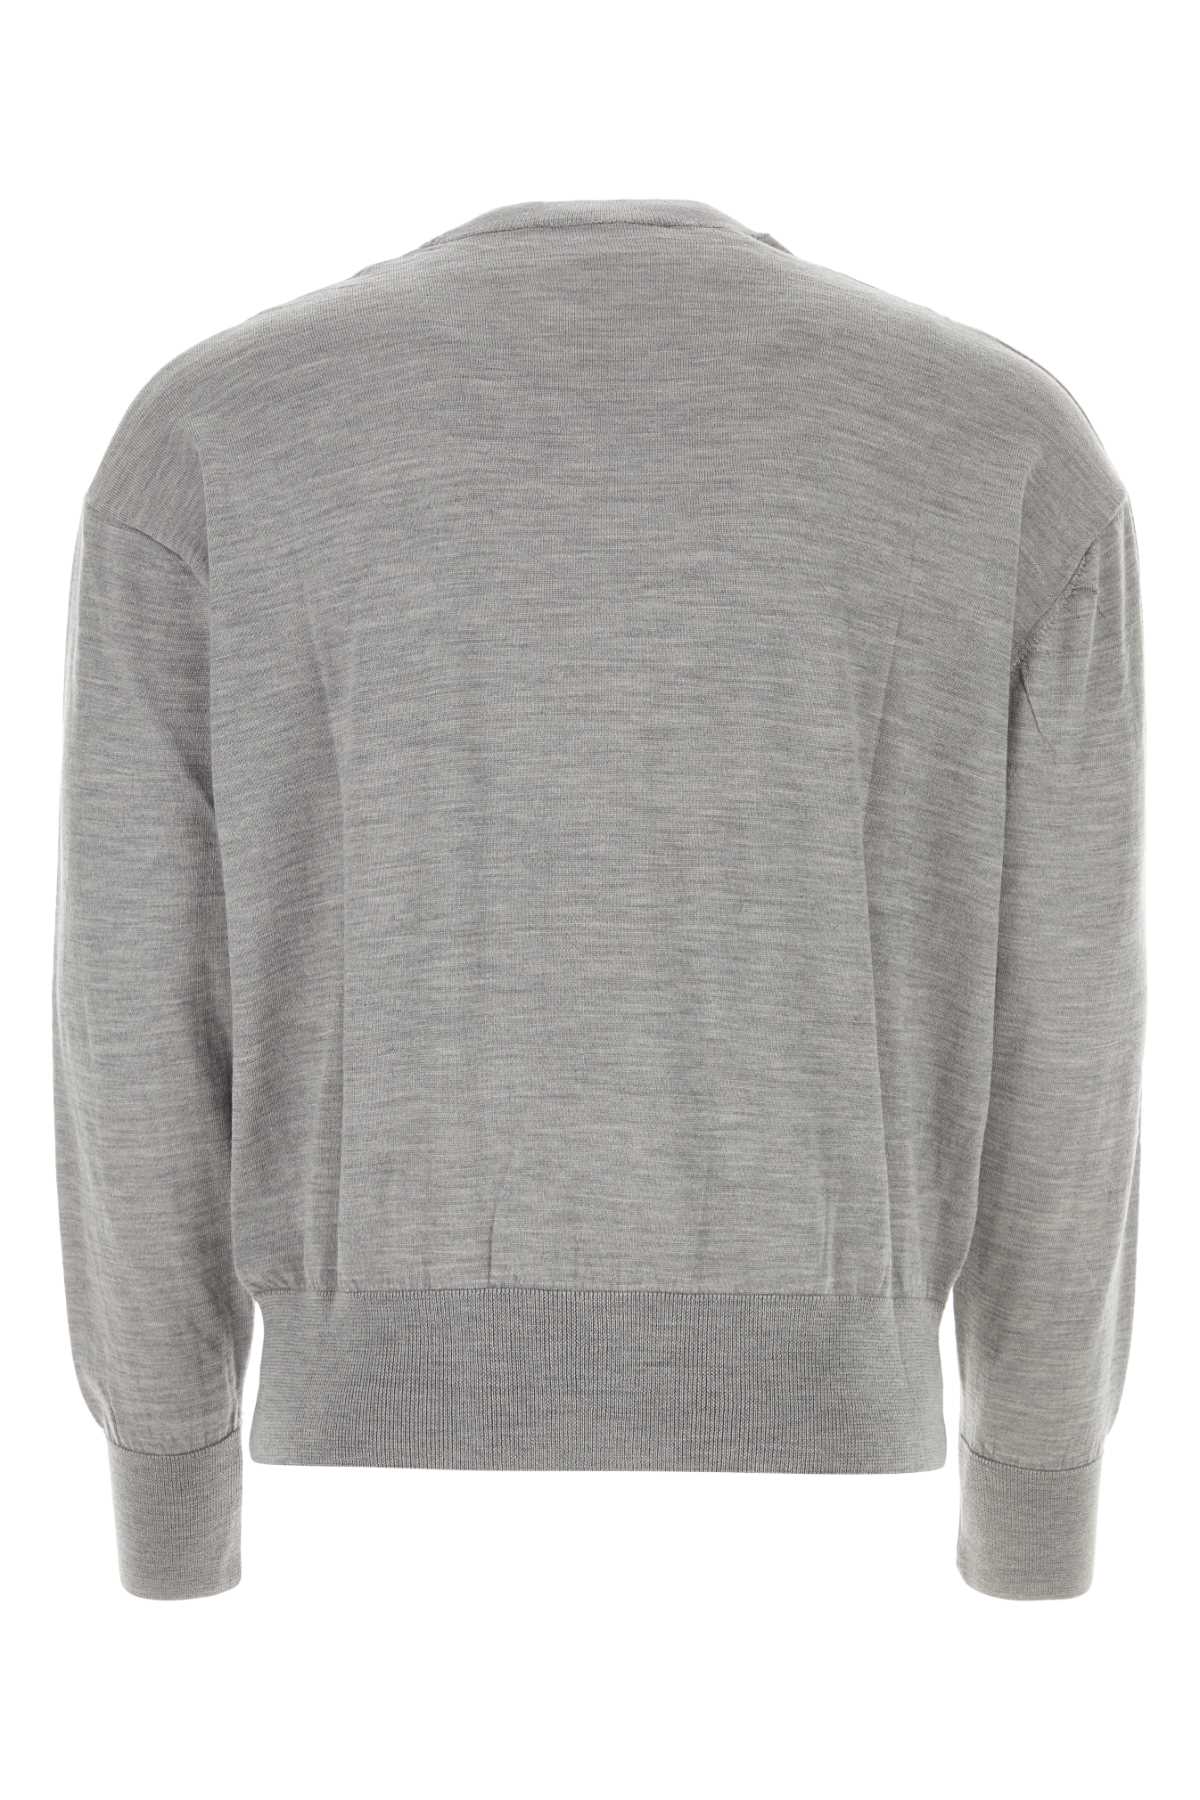 Shop Ami Alexandre Mattiussi Grey Wool Sweater In Heathergrey